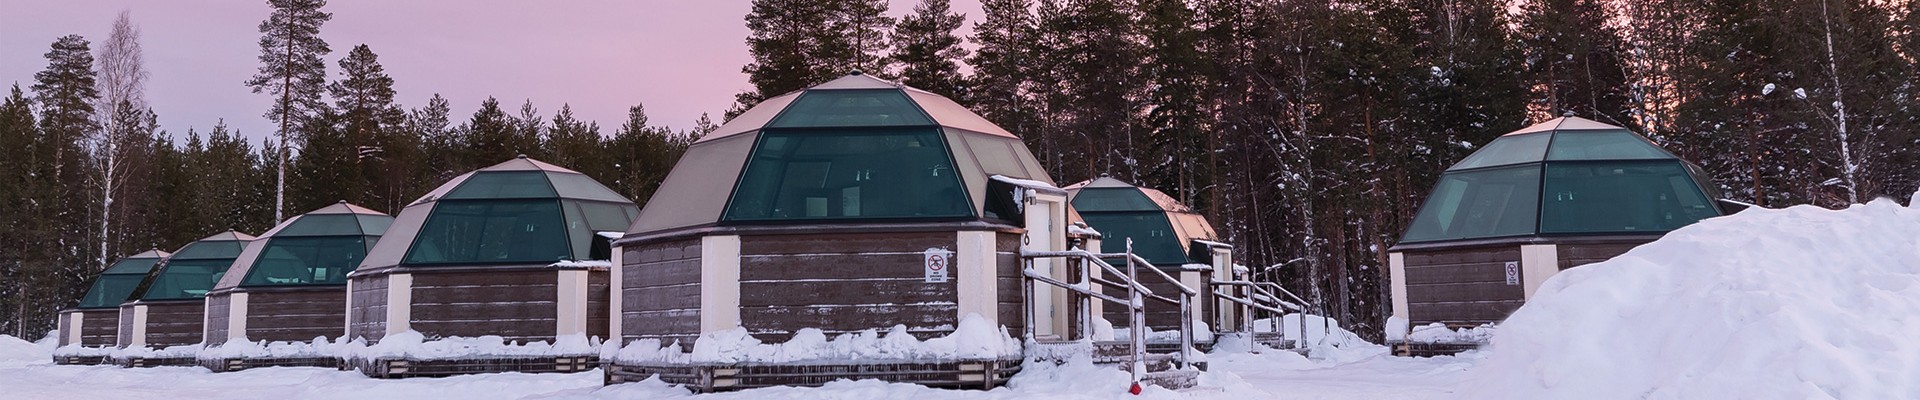 Kakslauttanen Arctic Resort, Lapland - Finland Package (3 nights)